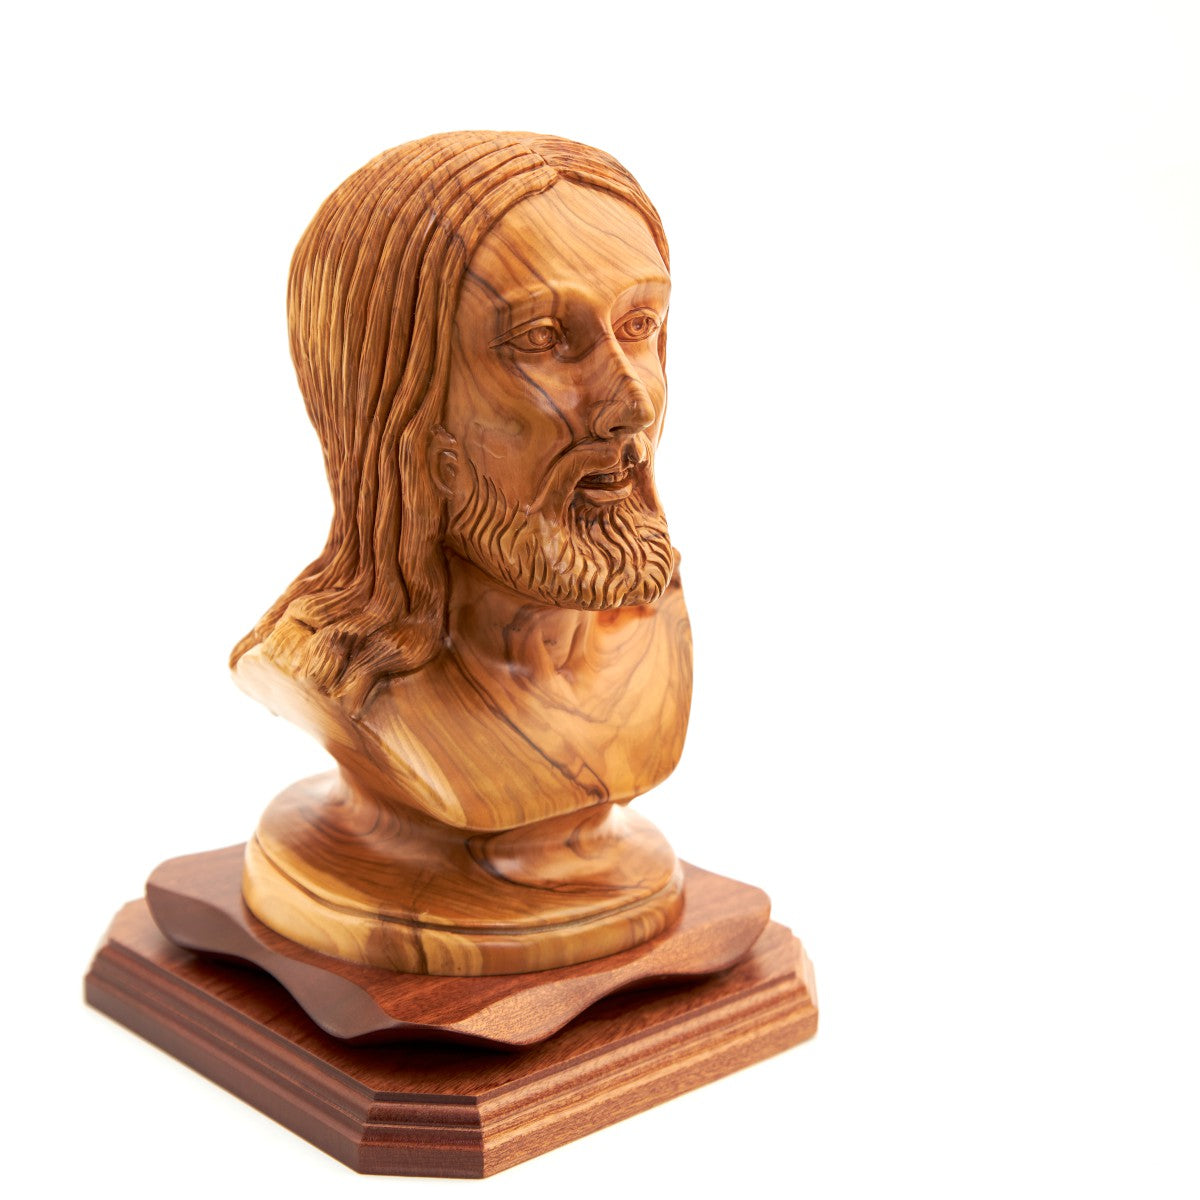 Bust of Jesus Christ, Wooden Sculpture 10.6"